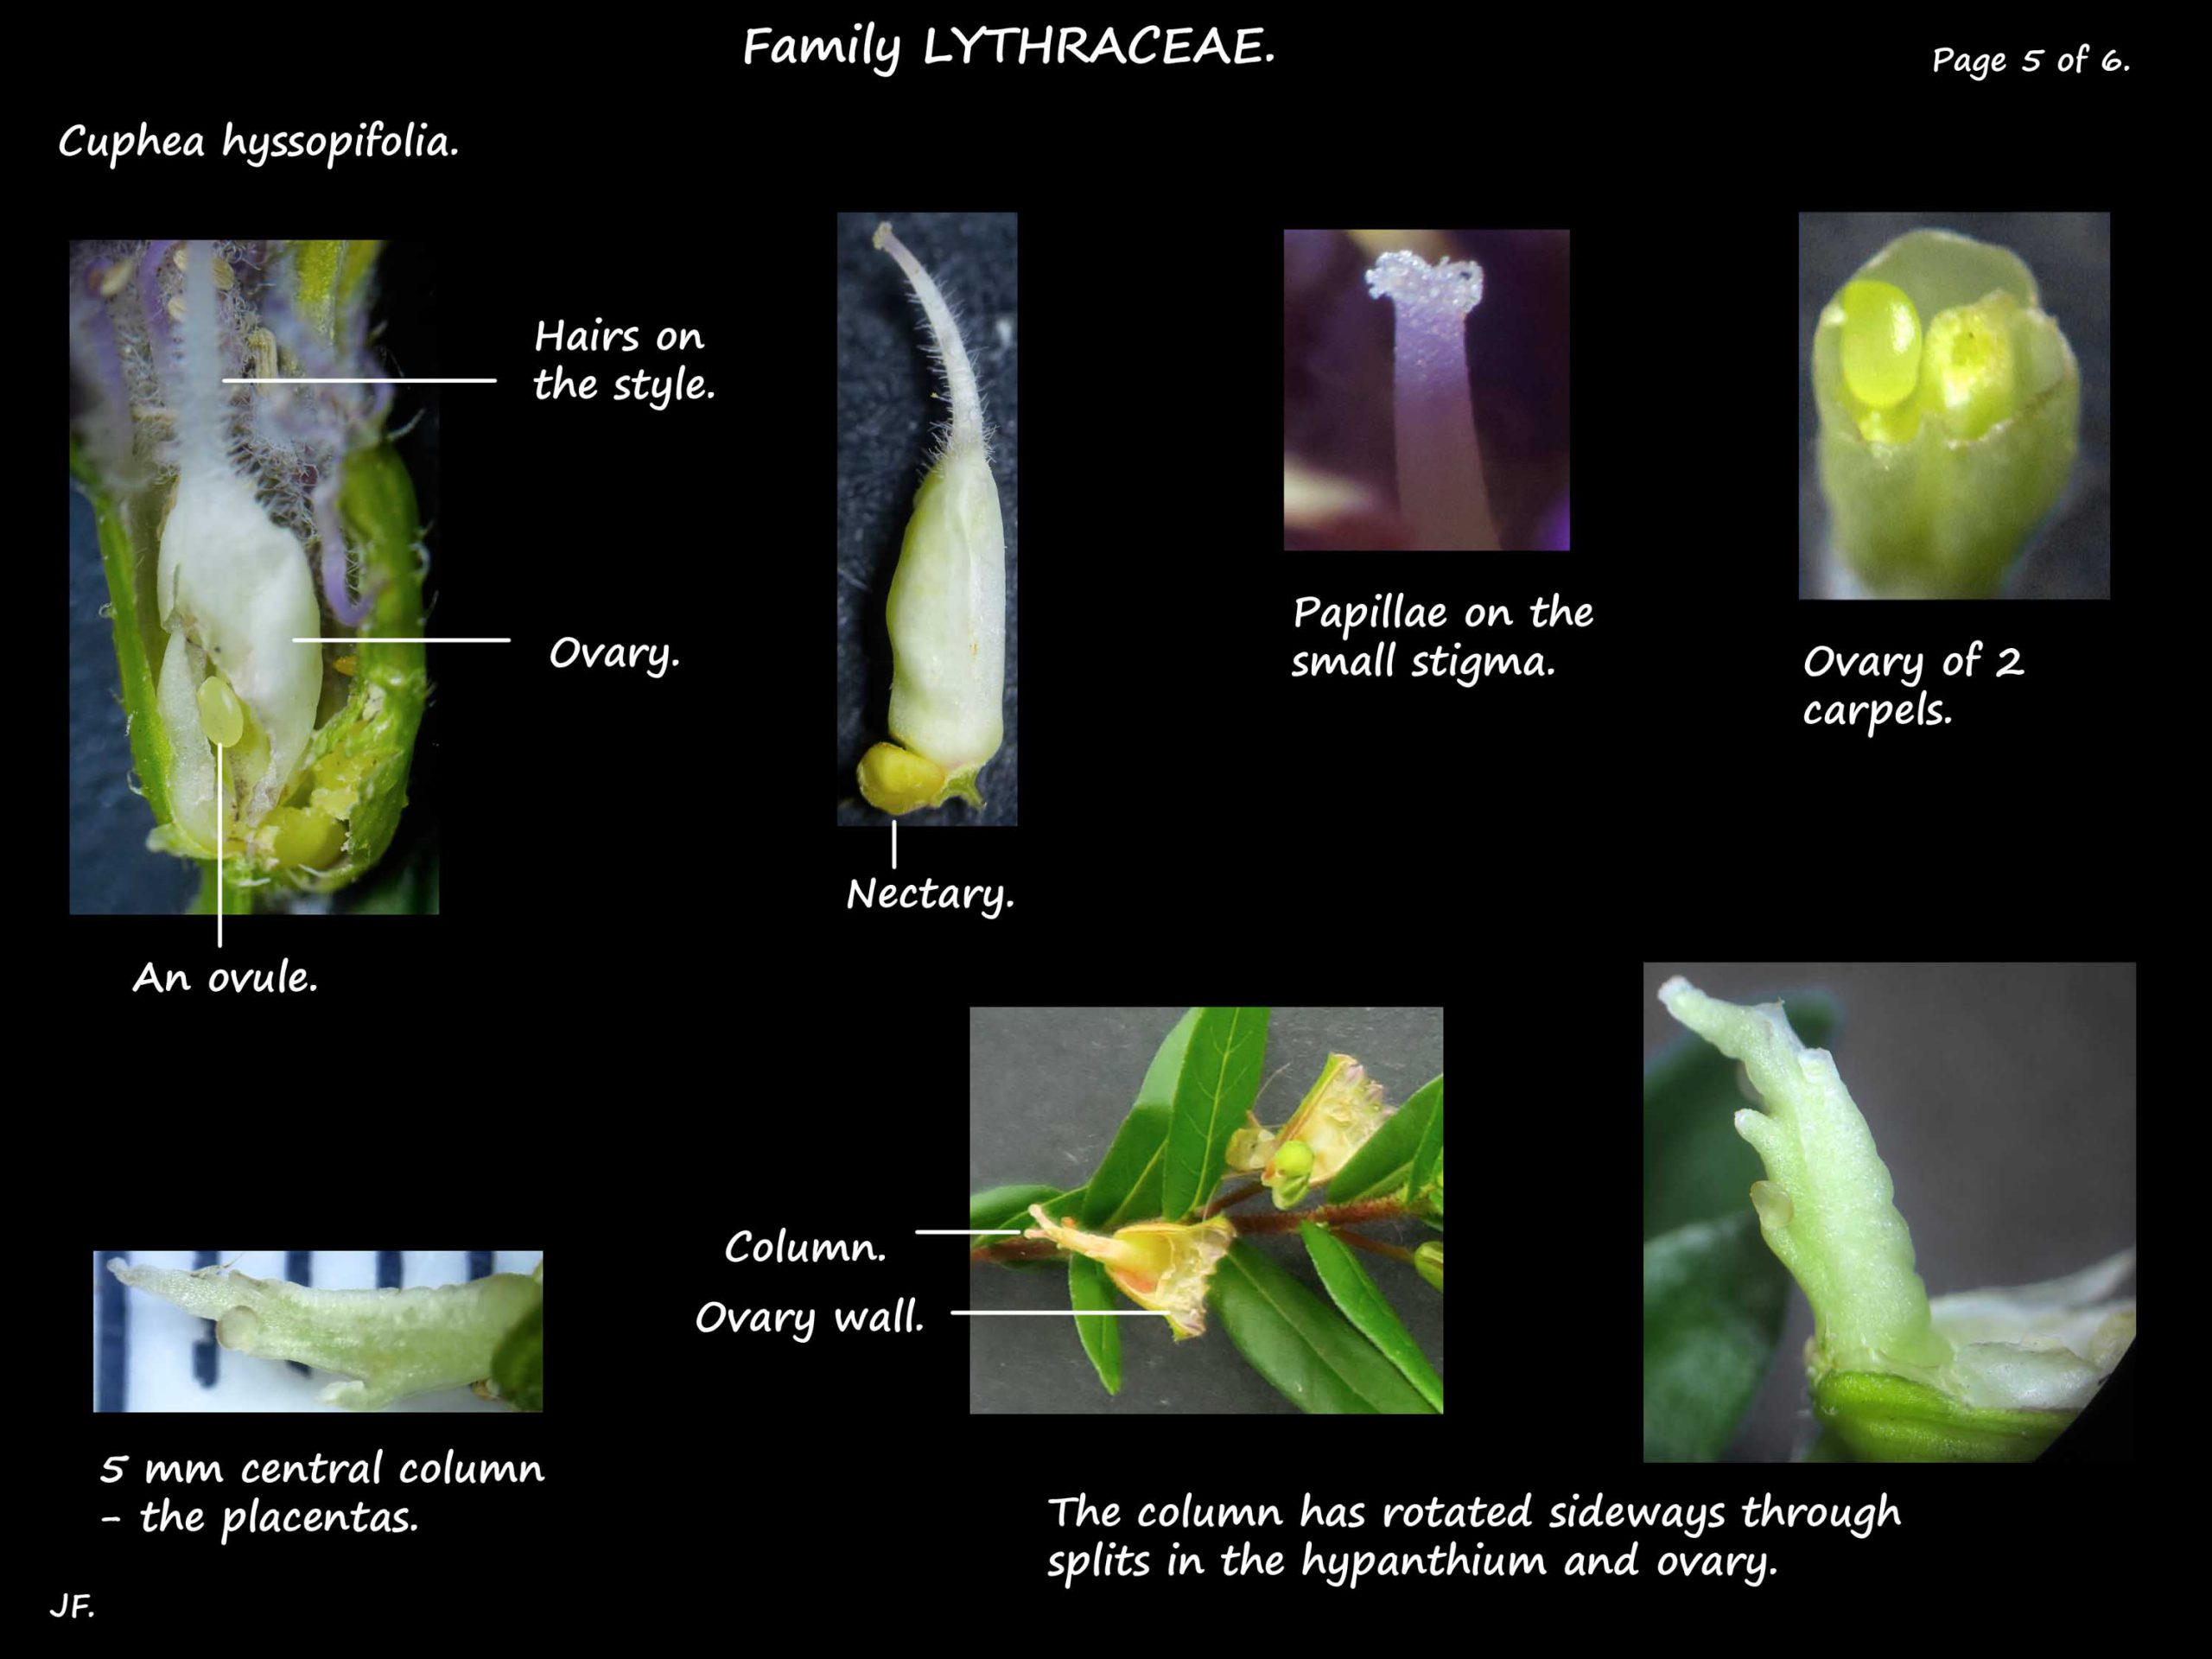 5 Ovary & column of Cuphea hyssopifolia